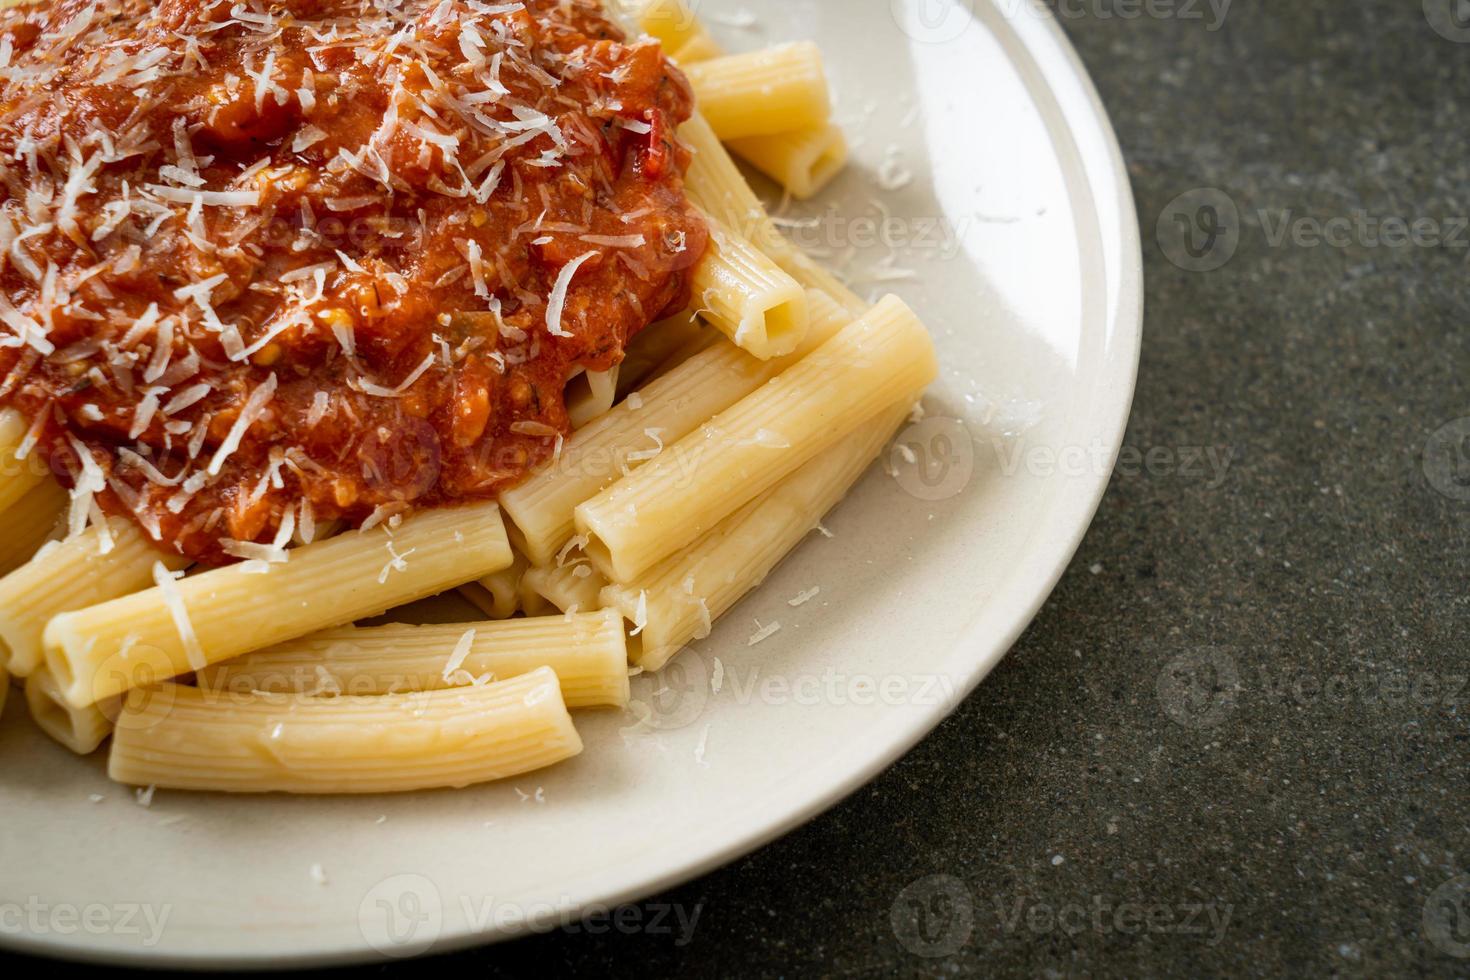 Rigatoni pasta with pork bolognese sauce - Italian food style photo